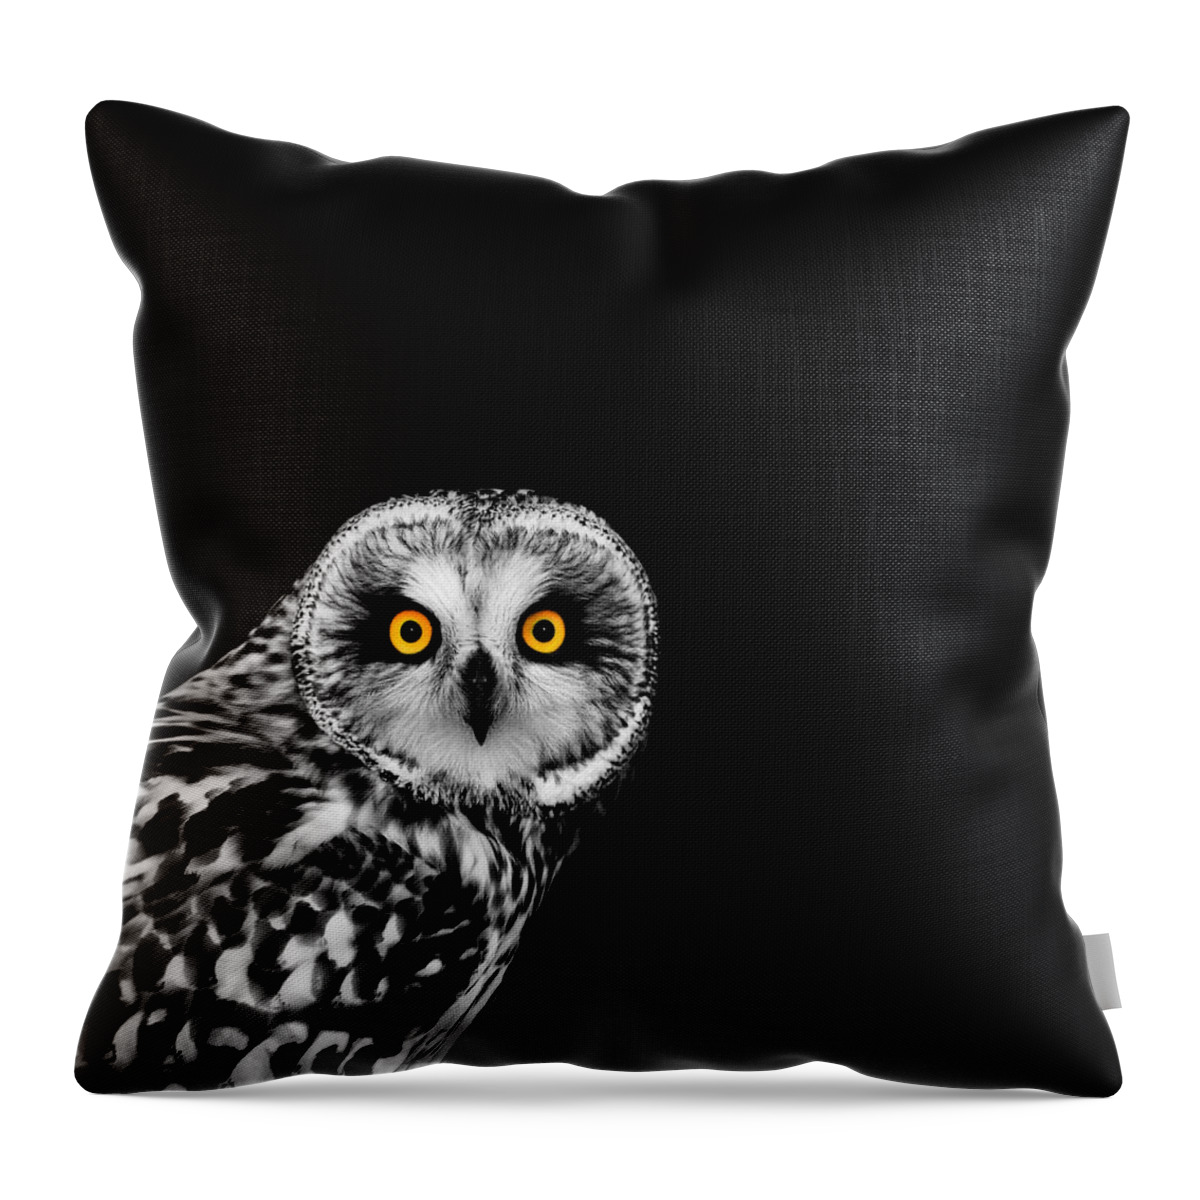 Short Eared Owl Throw Pillow featuring the photograph Short-Eared Owl by Mark Rogan